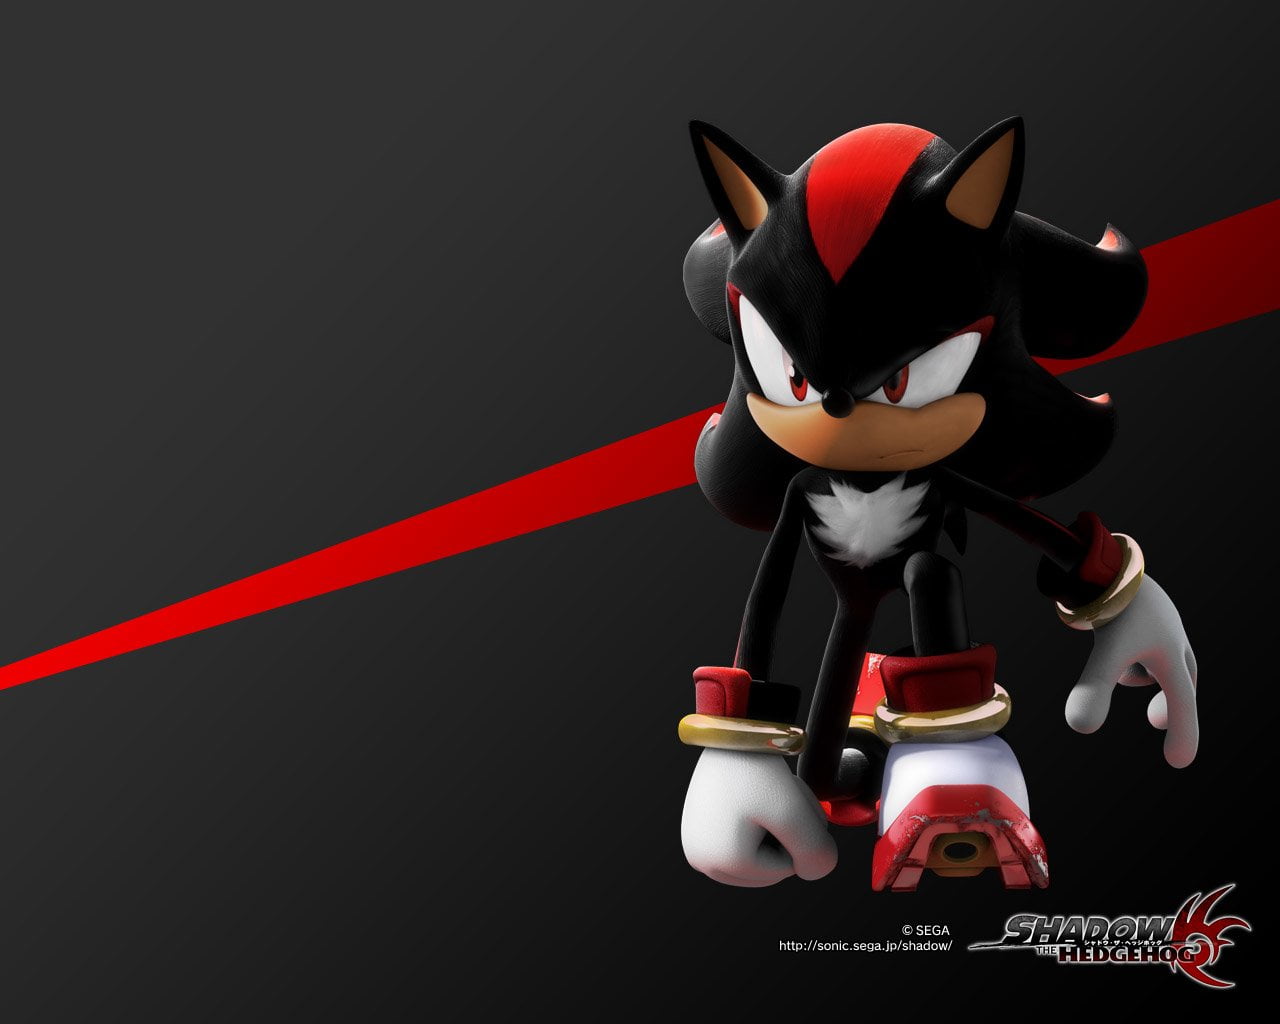 Sonic, Shadow the Hedgehog, representation, black background